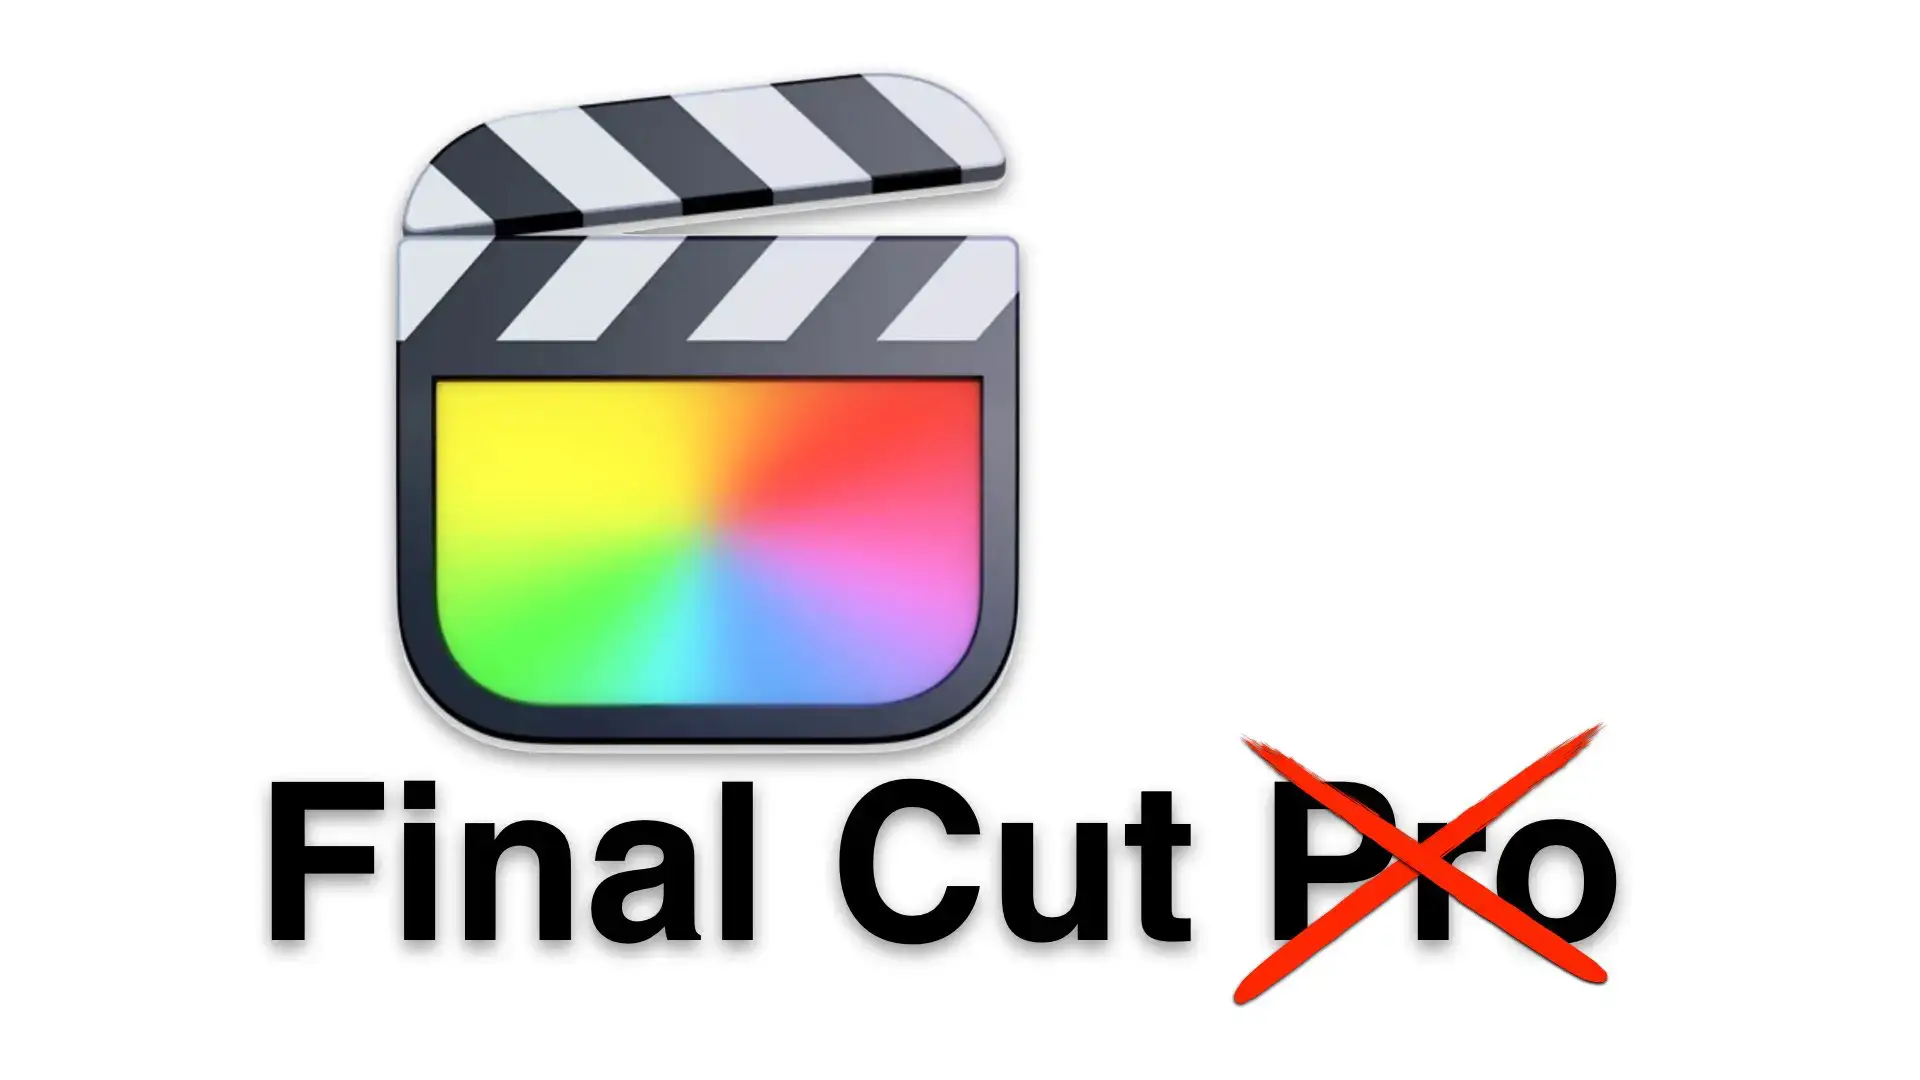 Final Cut Pro X 10.6.7 Crack + Torrent For Windows and Mac